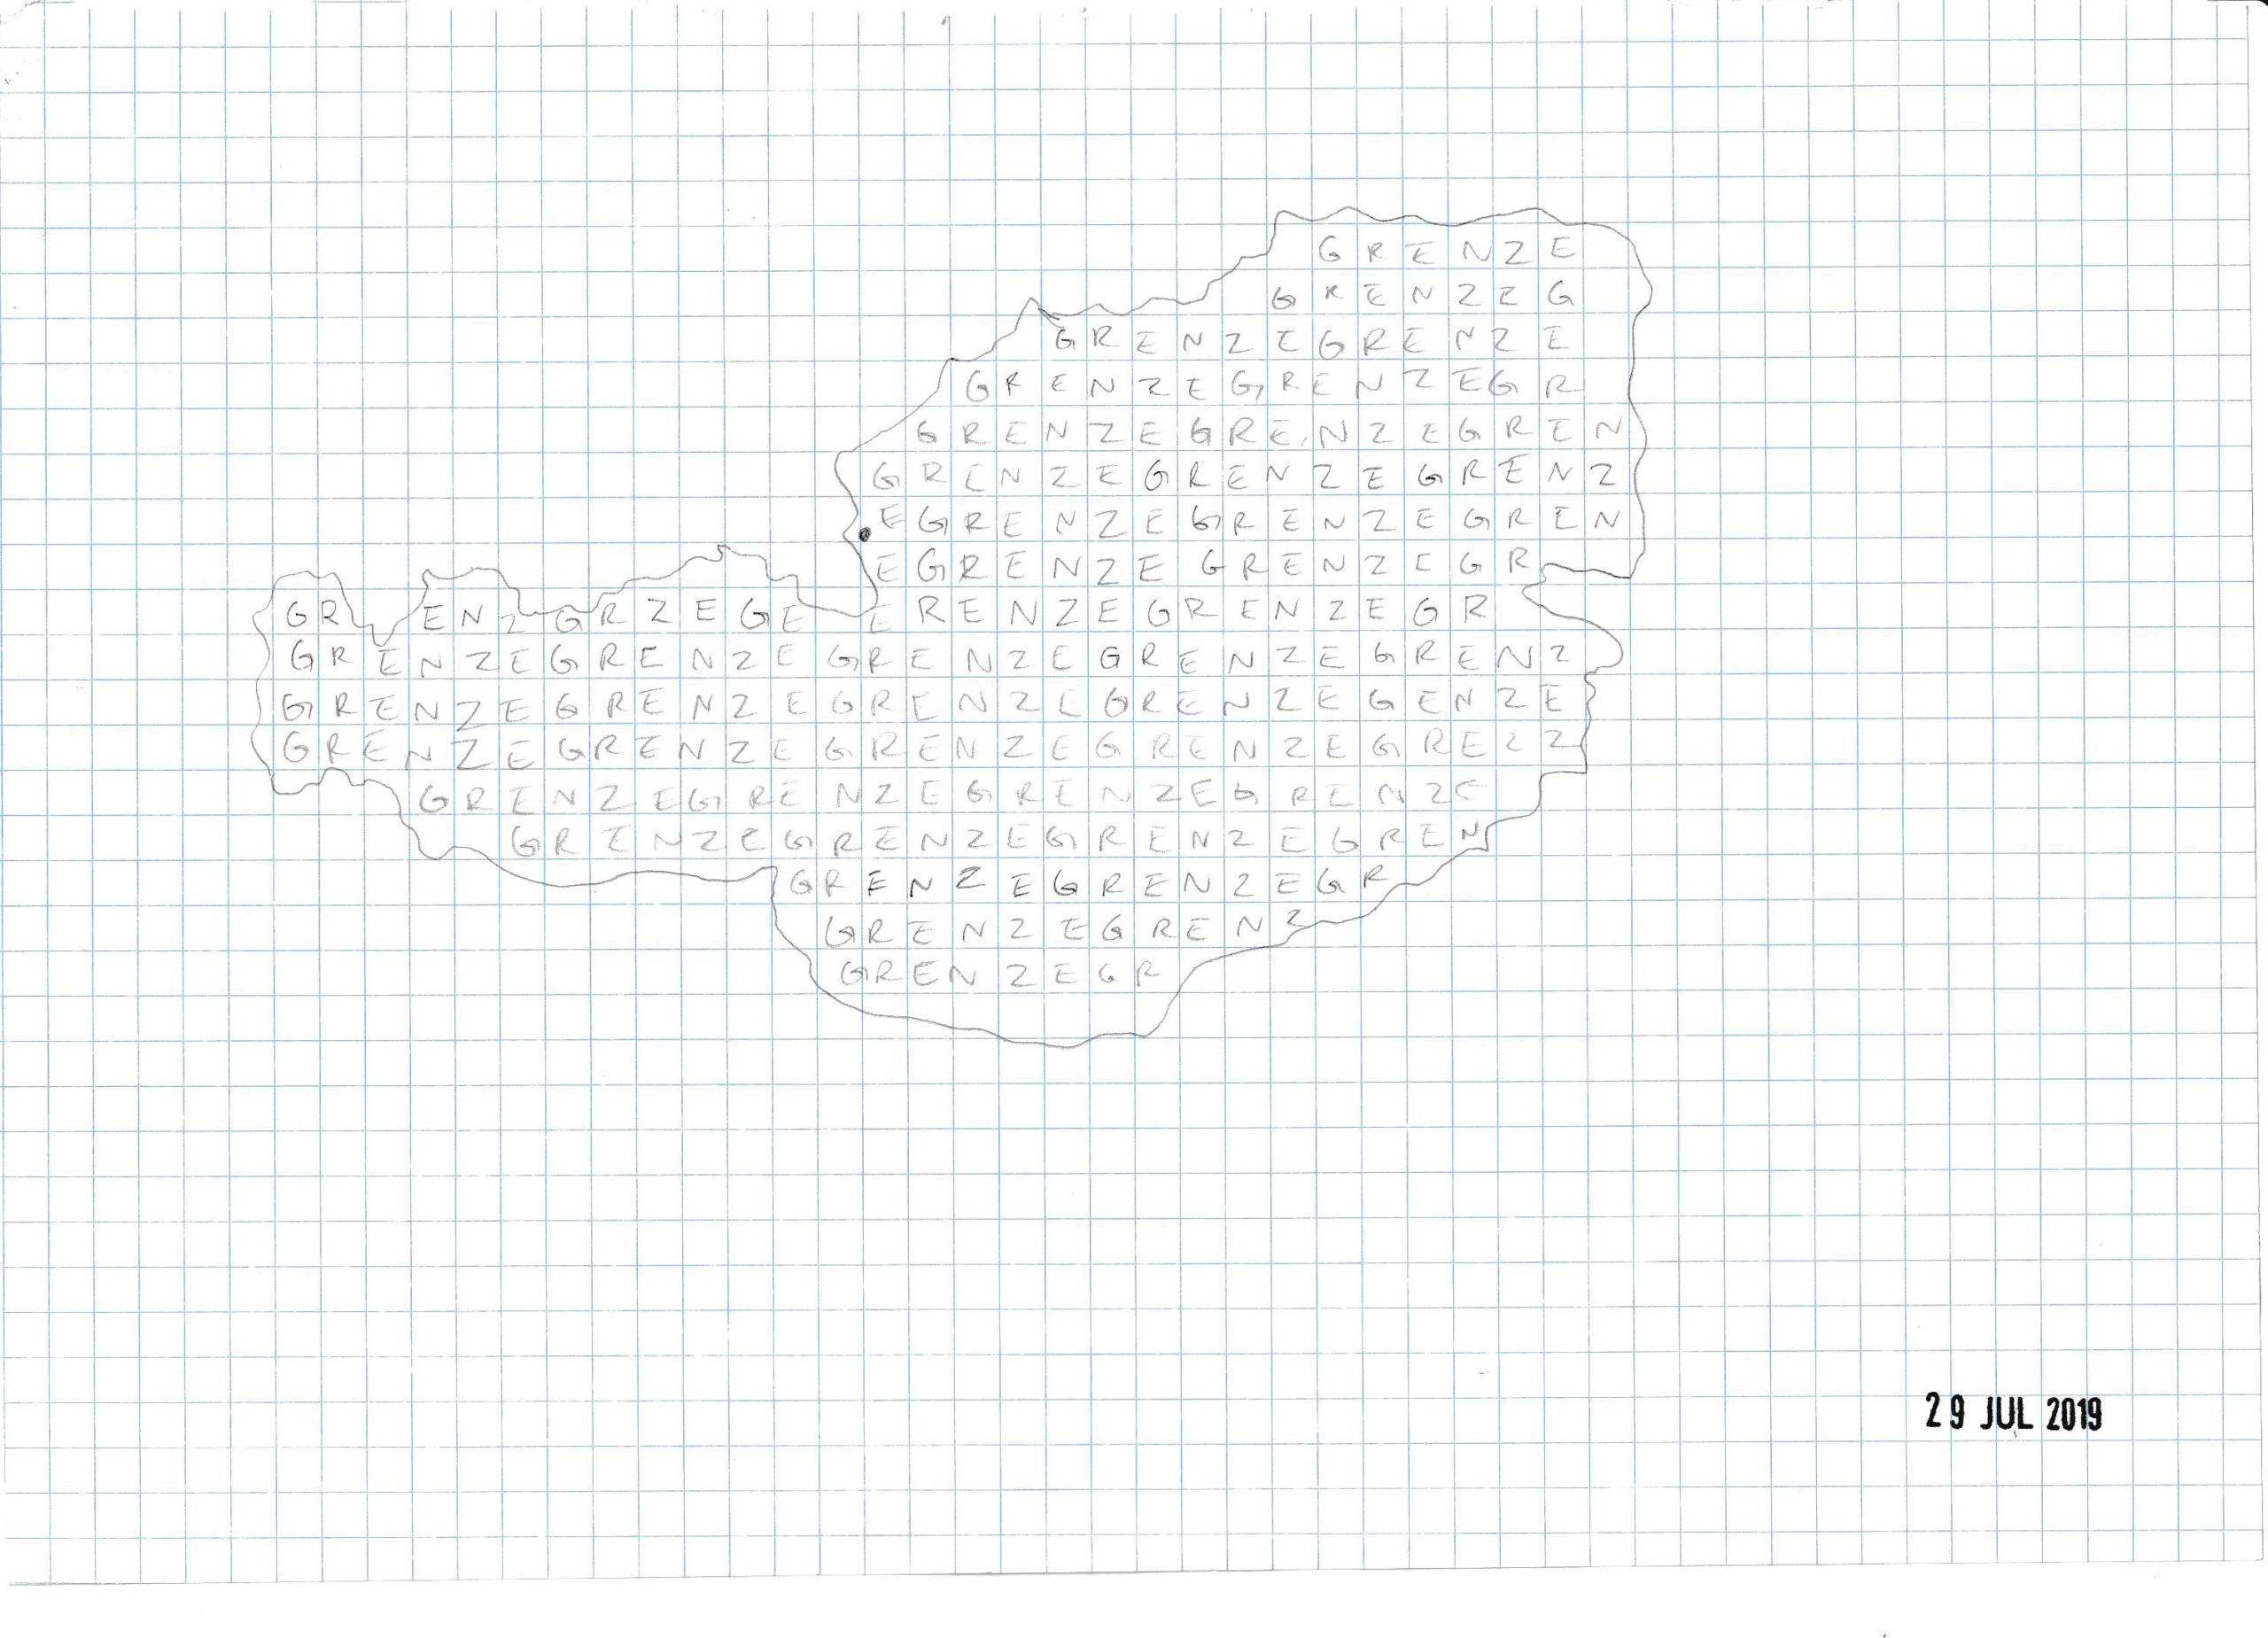 Grenzen, 2019, pencil on graph paper, 15 x 21 cm